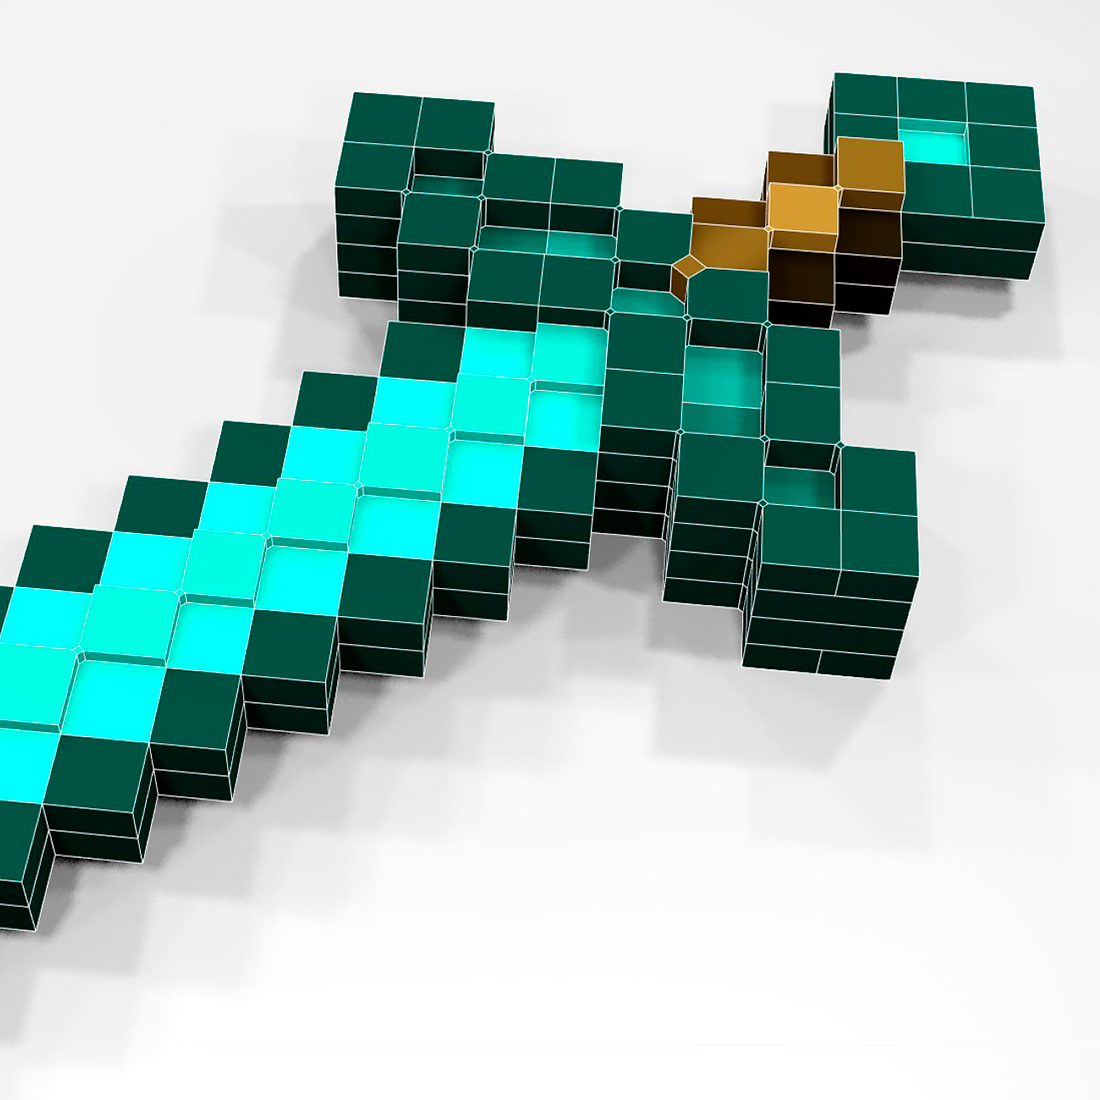 Wonderful 3d model of a diamond sword in Minecraft style